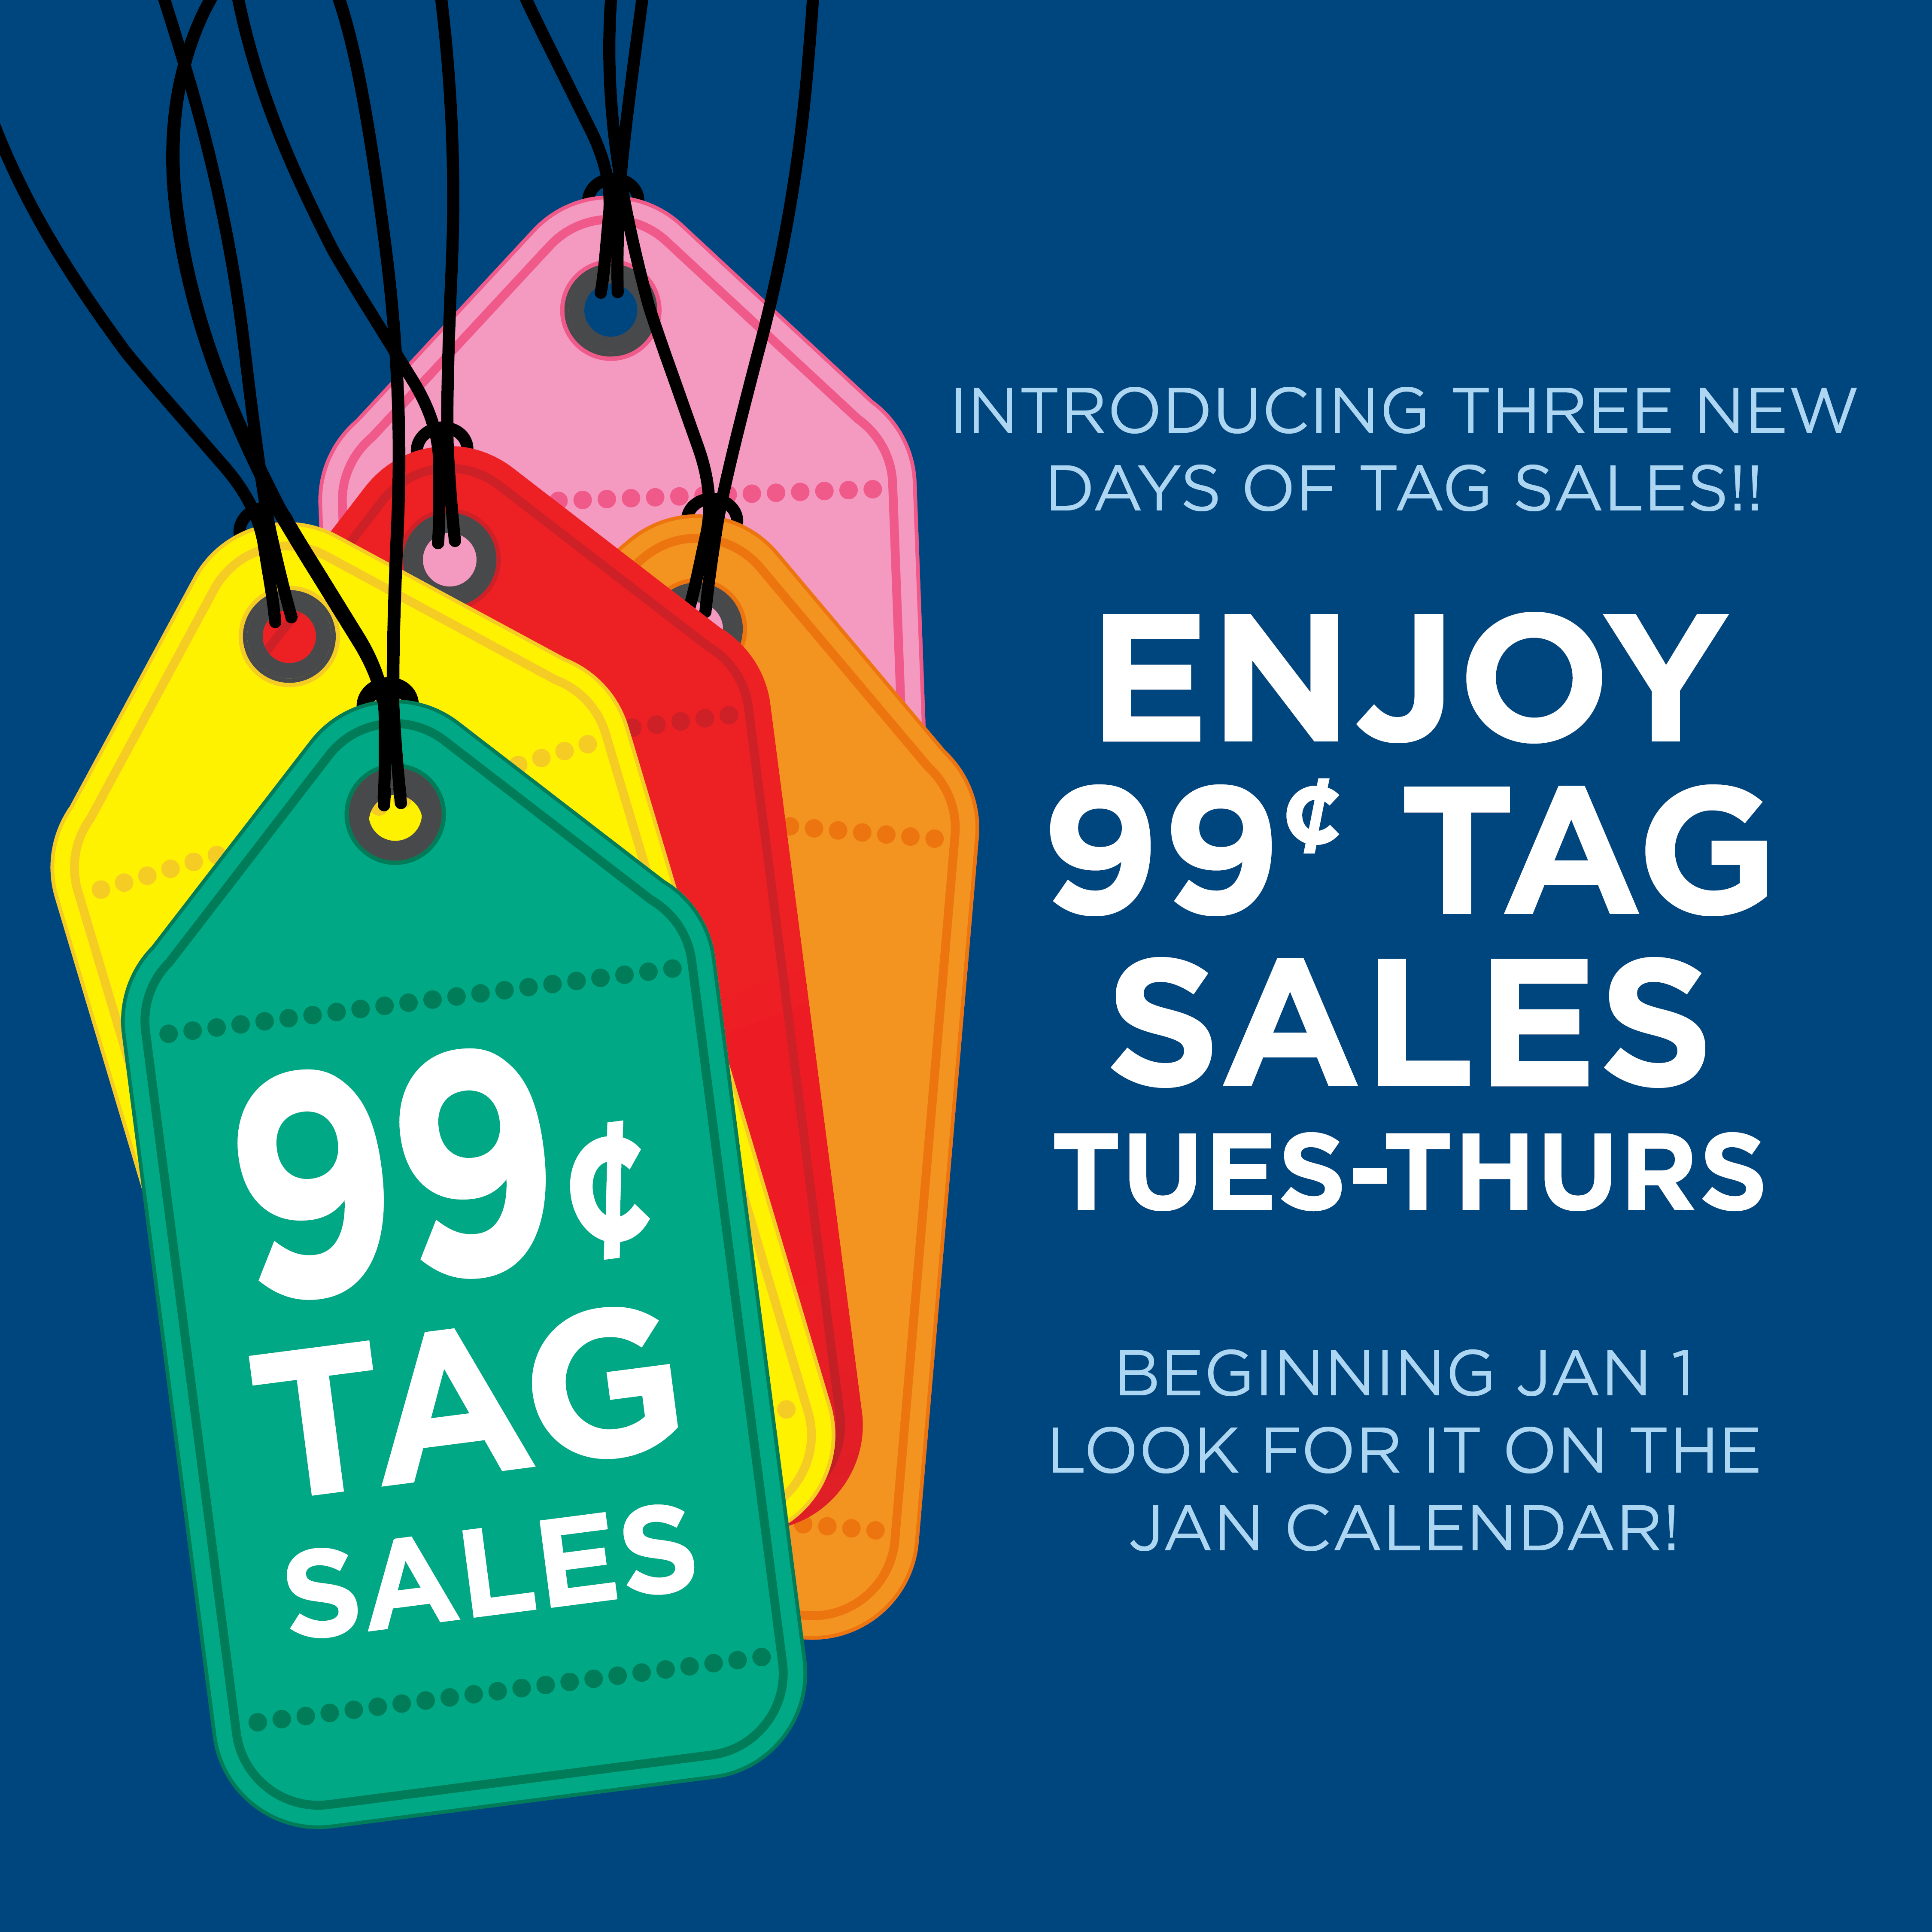 99 cent tag sale days Tues-Thurs